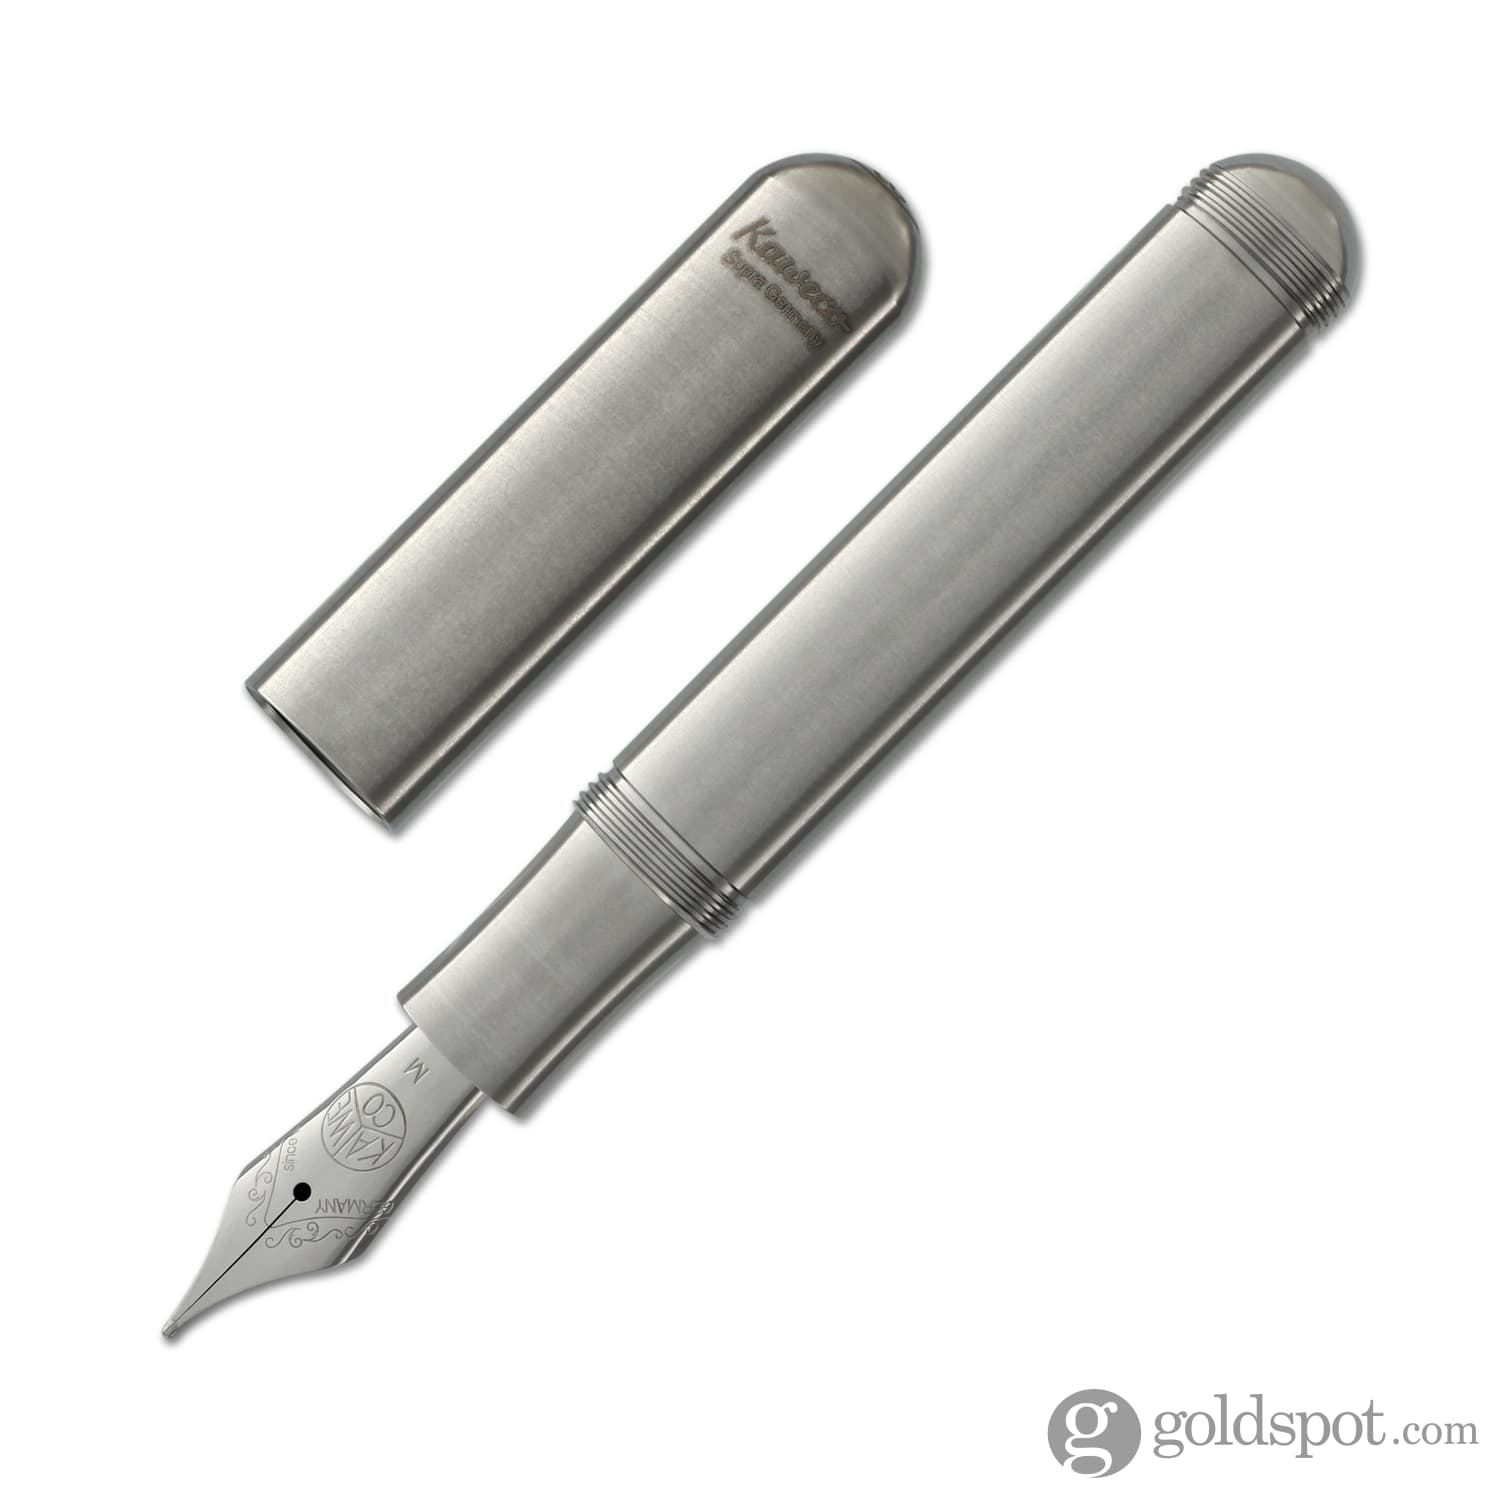 Kaweco Supra fountain pen review - The Pen Company Blog